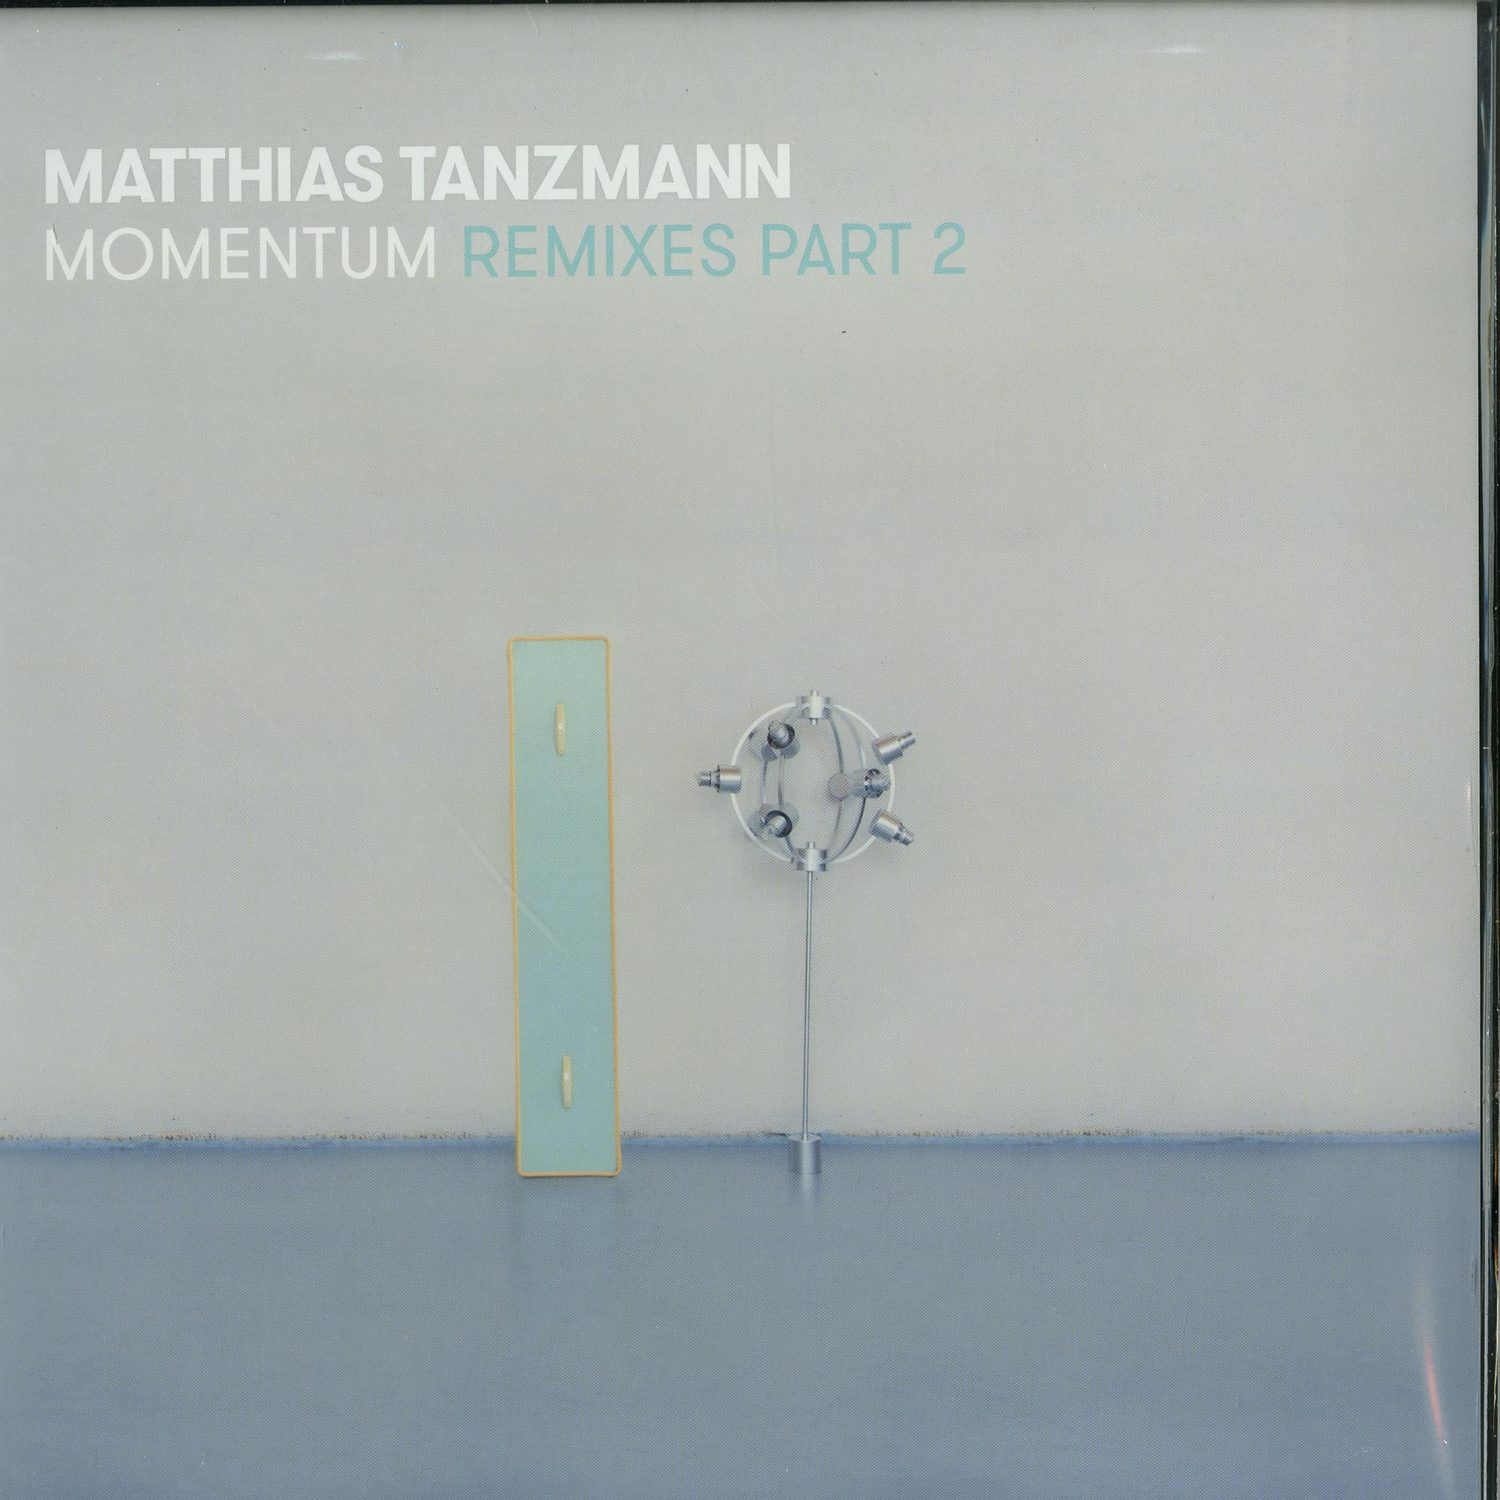 Matthias Tanzmann - MOMENTUM REMIXES PT. 2